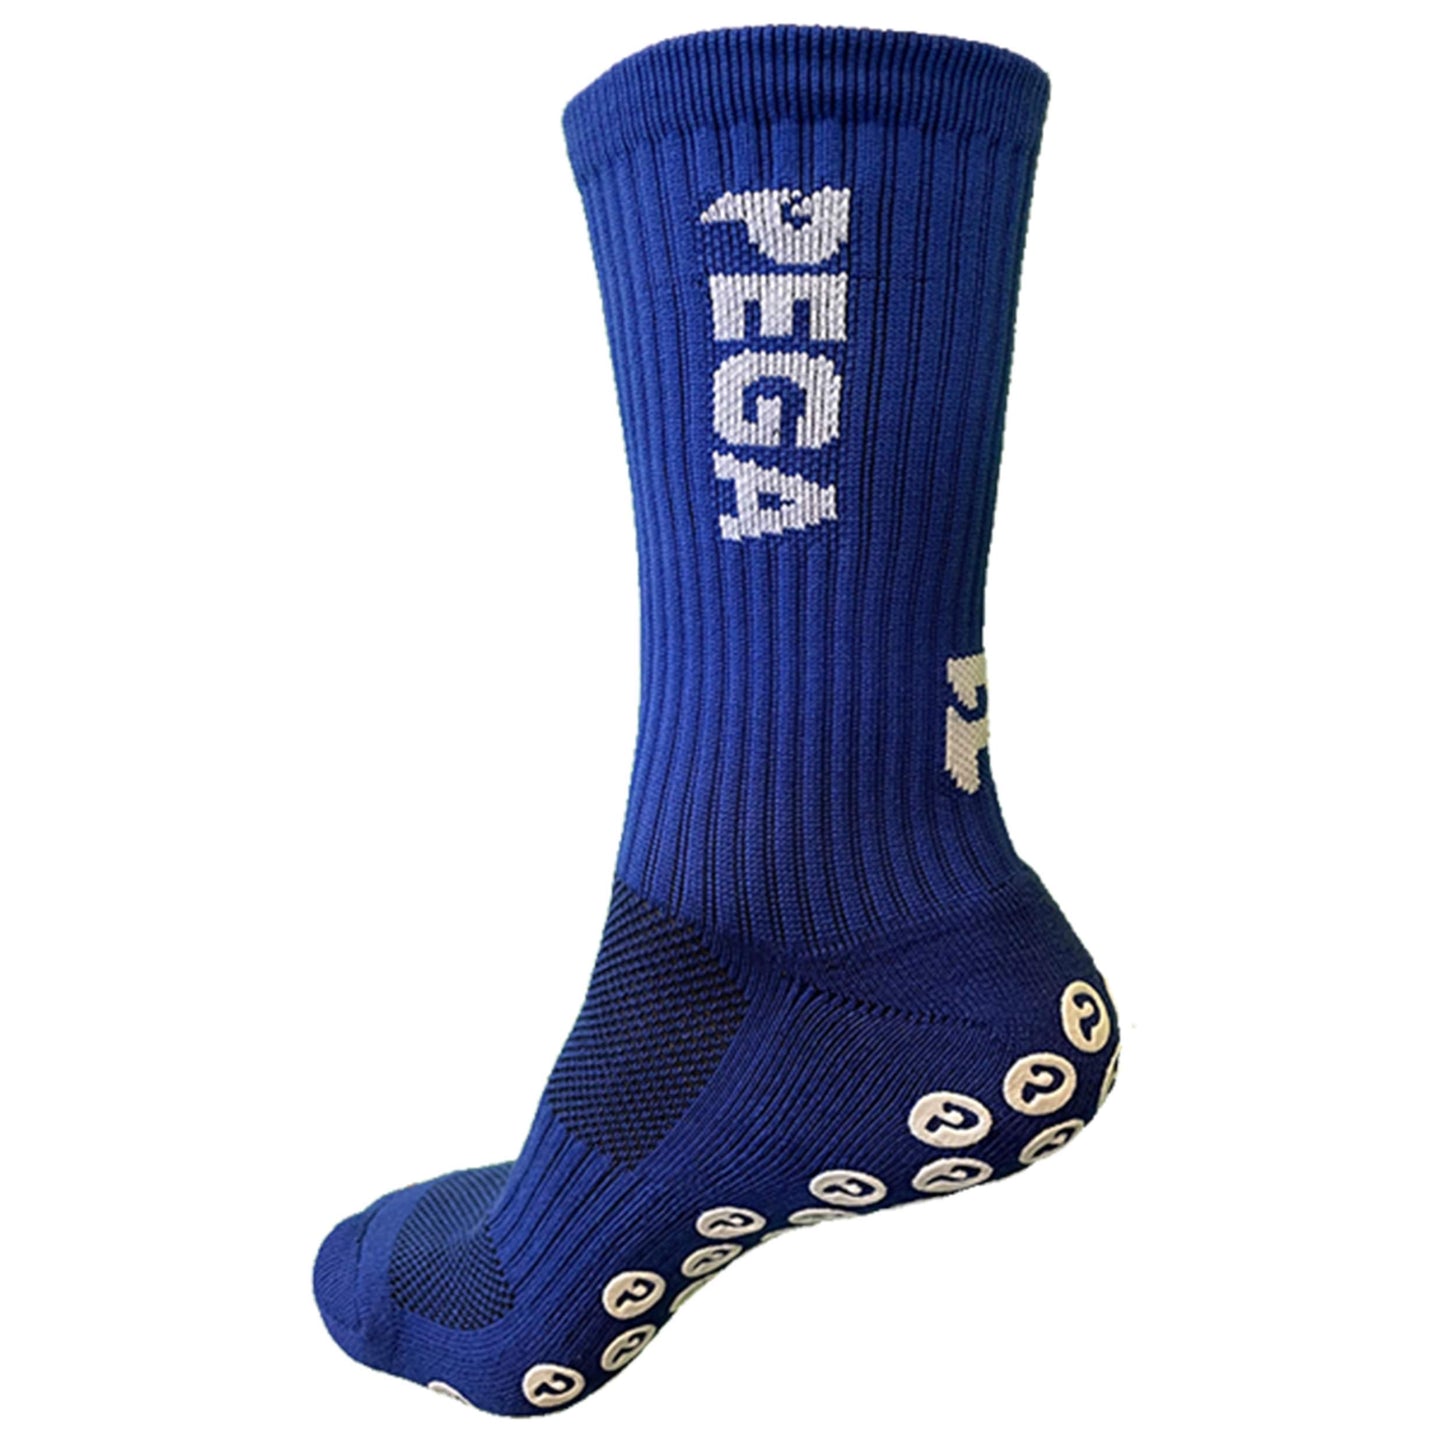 Grips Socks - Pega